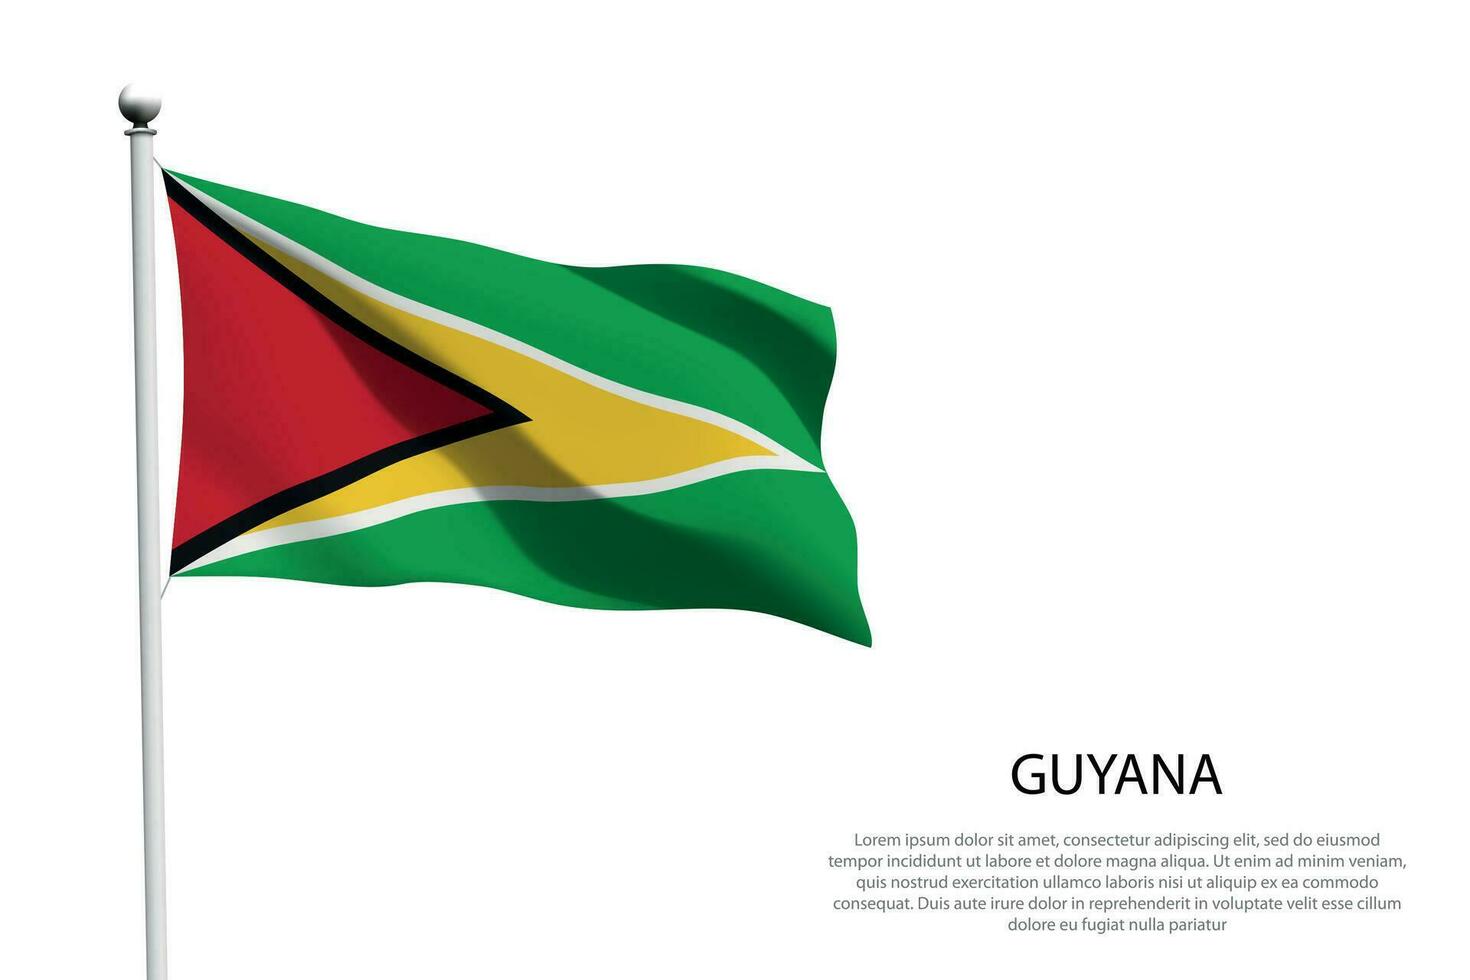 nationell flagga guyana vinka på vit bakgrund vektor